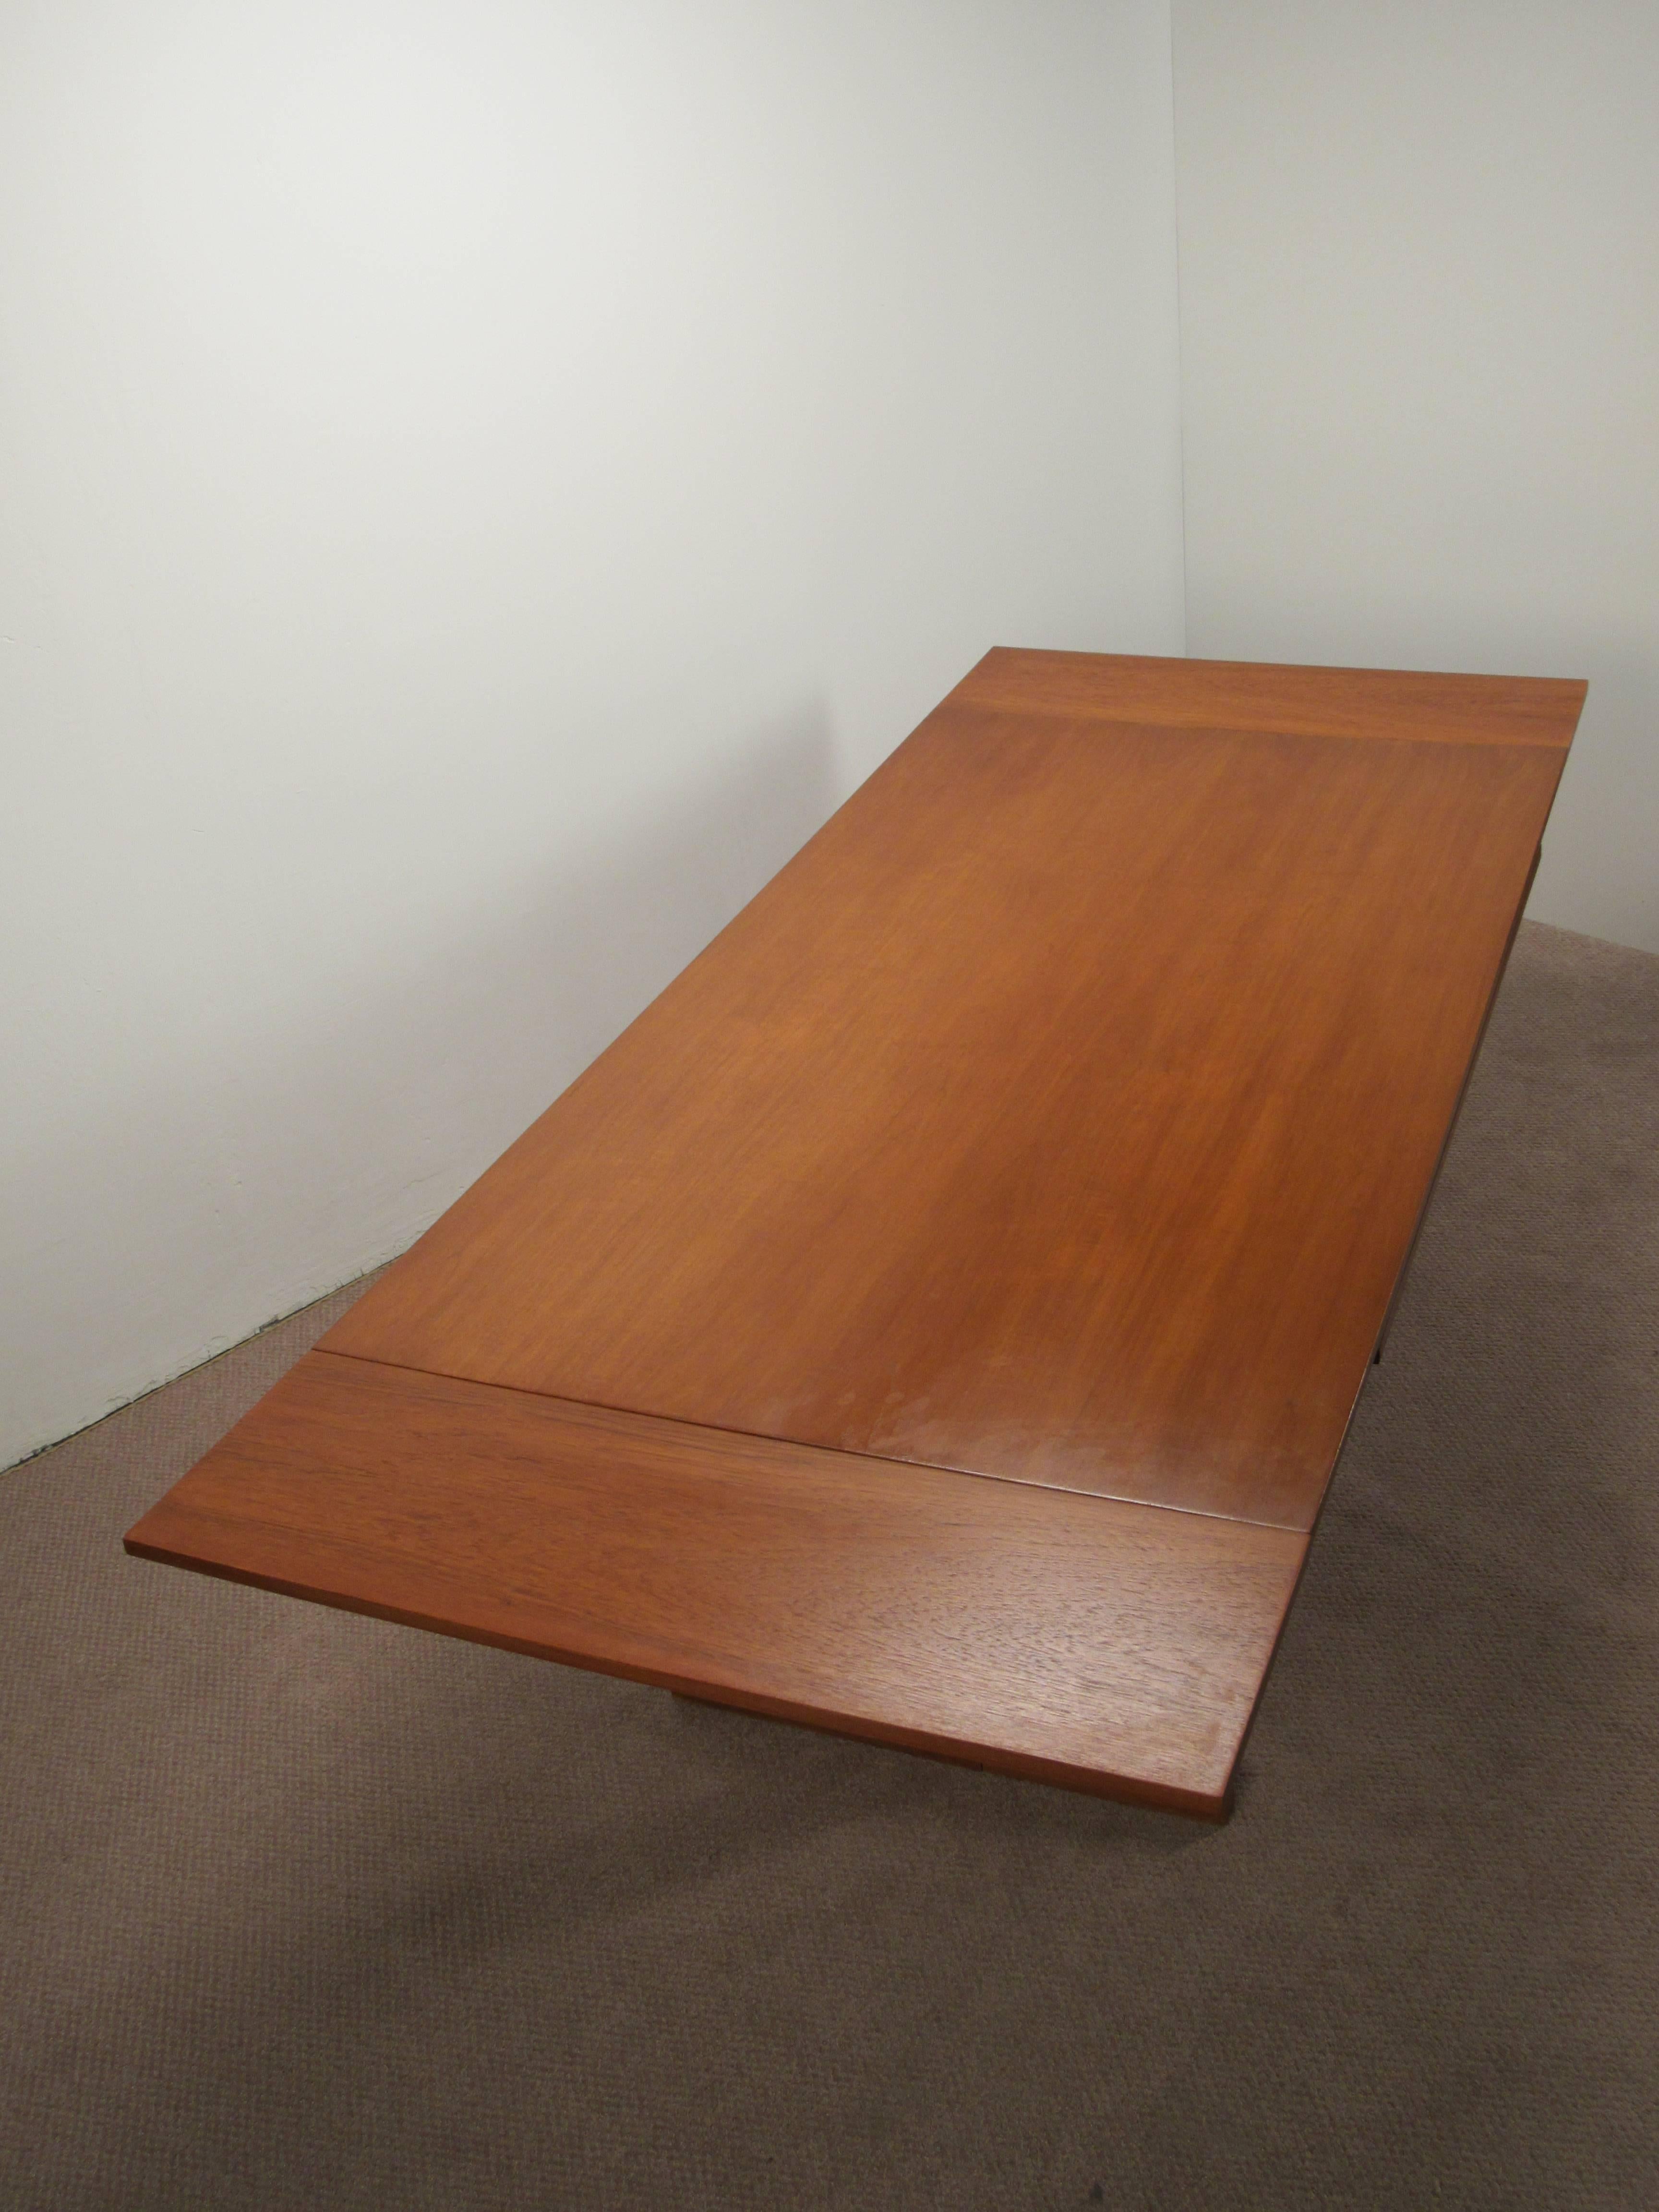 Mid-Century Modern Danish Modern Teak Extending Table with Pedestal Base, 1960s For Sale